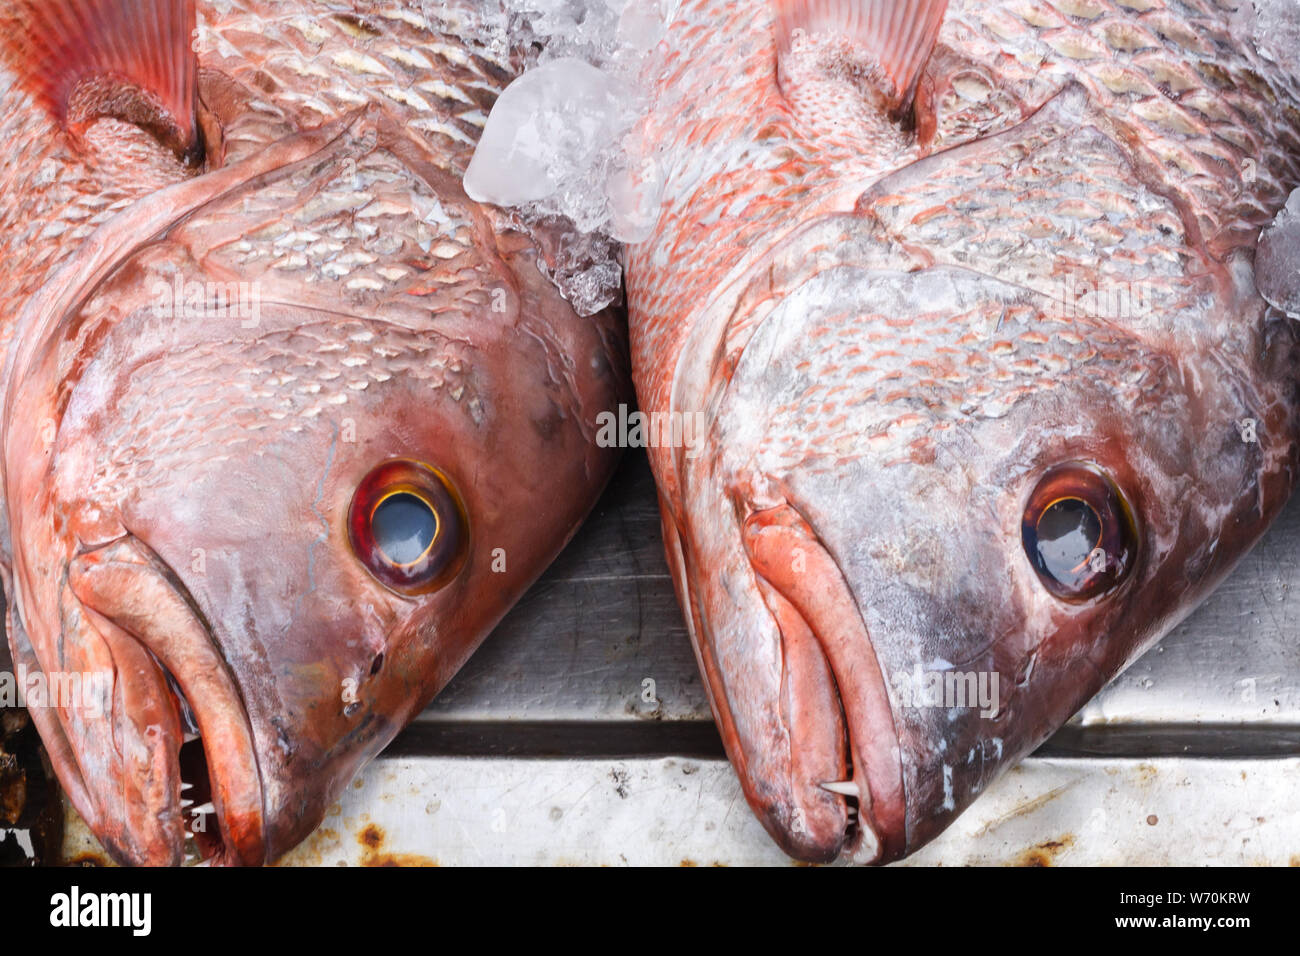 Red snapper fish heads on market stall, Rawai, Phuket, Thailand Stock Photo  - Alamy